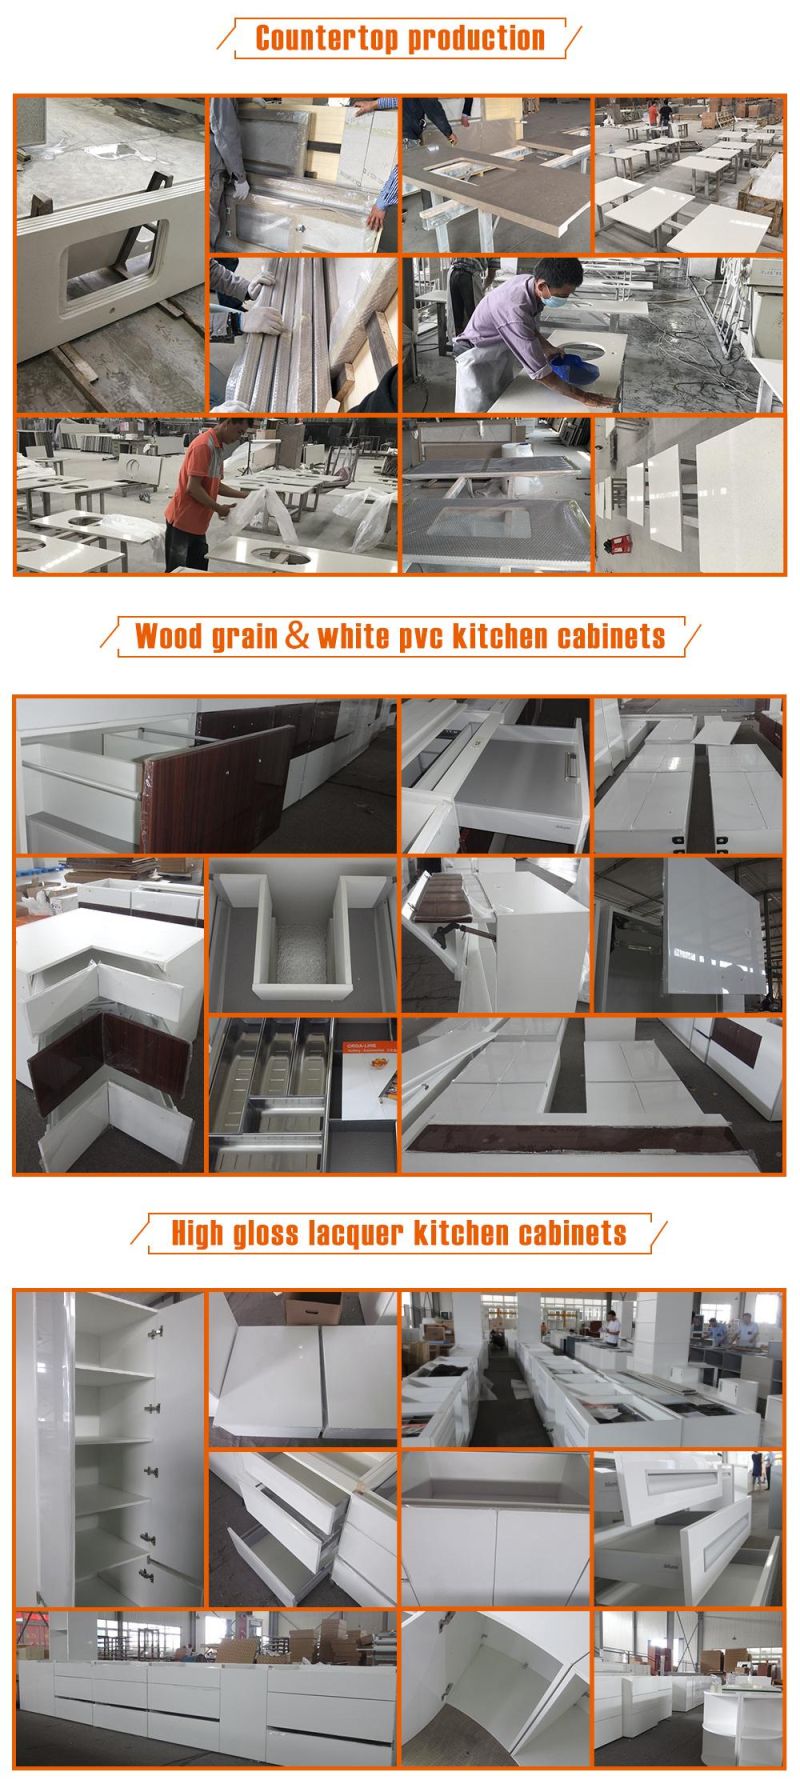 Orange Metallic Stainless Steel Kitchen Cabinets Furniture Hot Sale